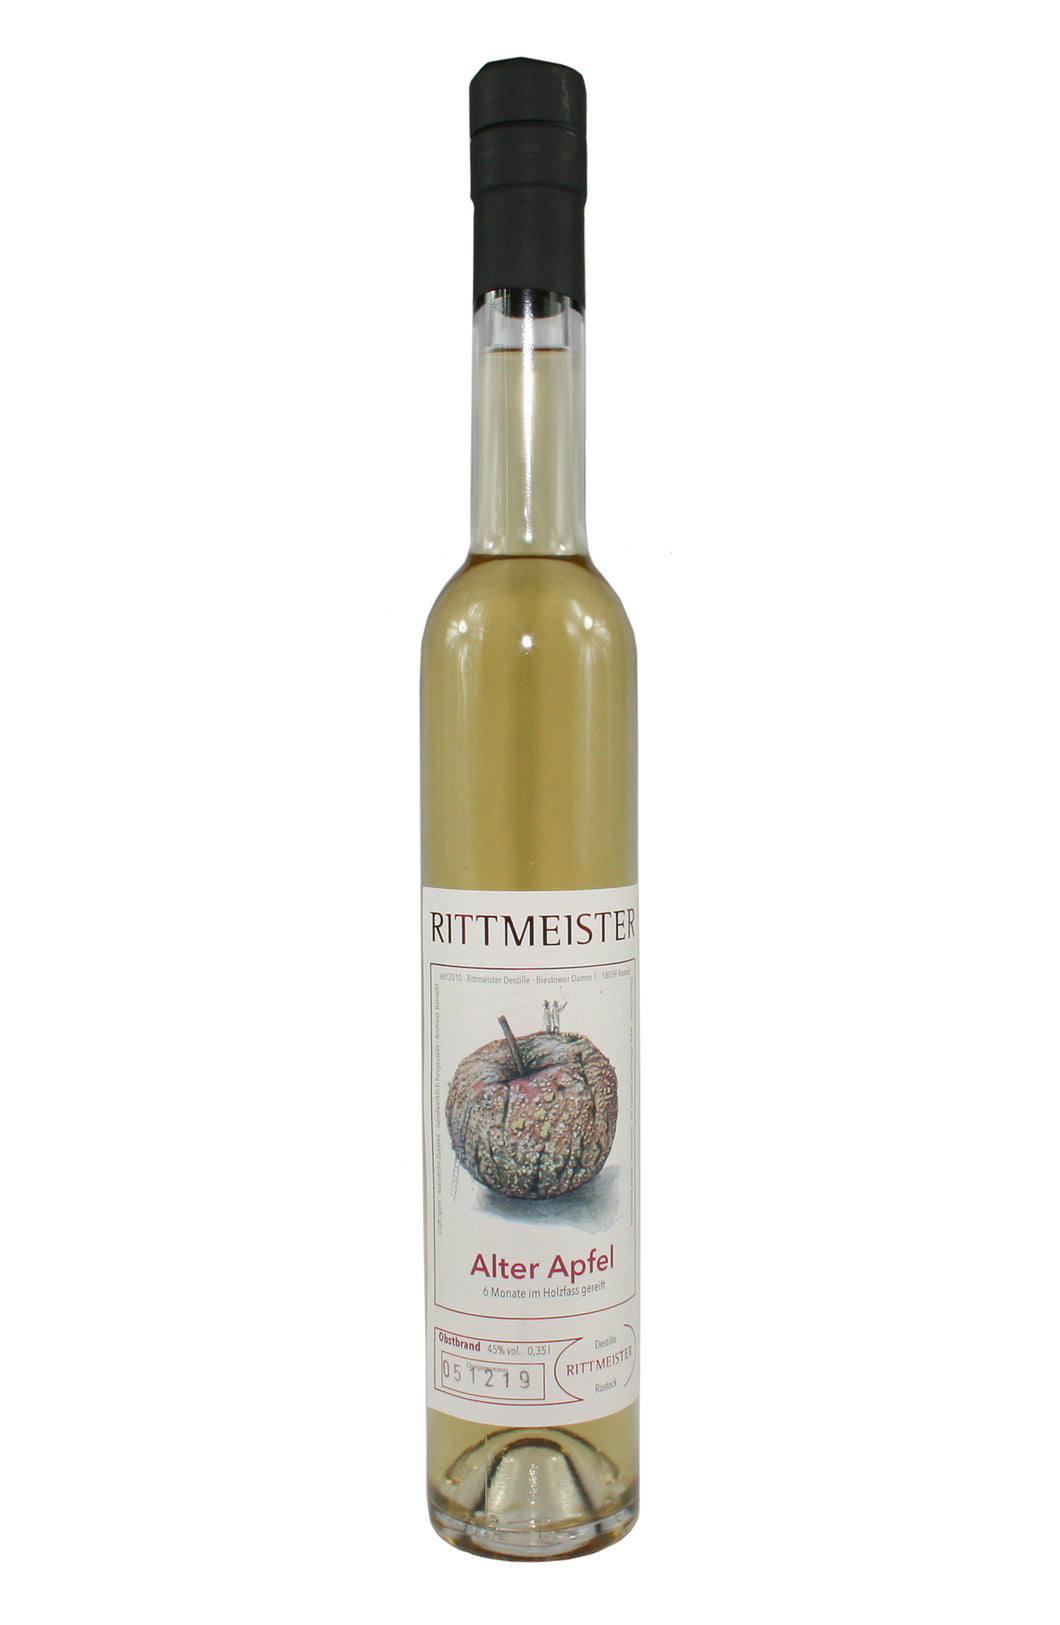 Rittmeister - Alter Apfel (45% Vol.) / Brand